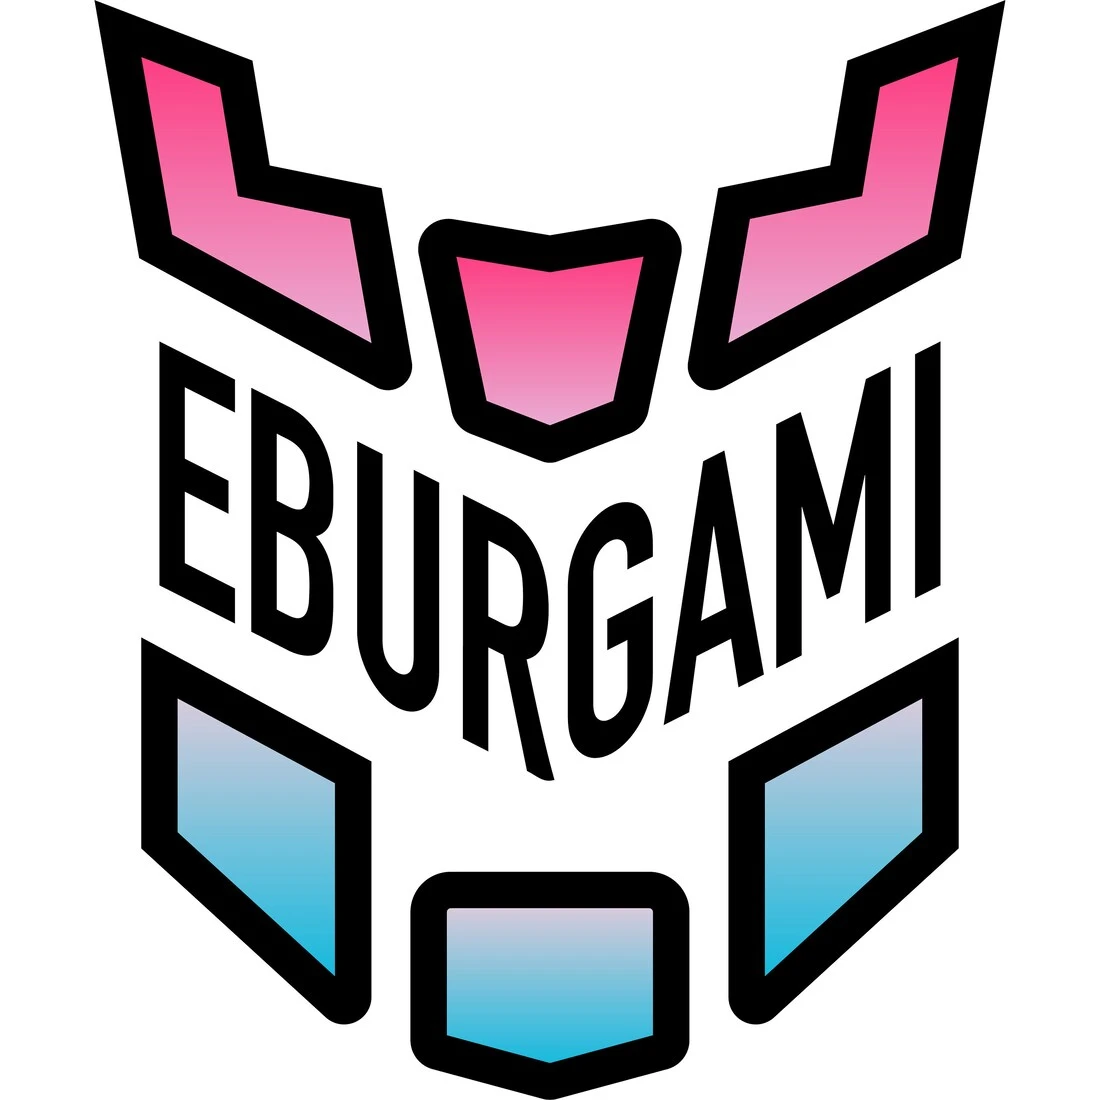 EBURgami cover